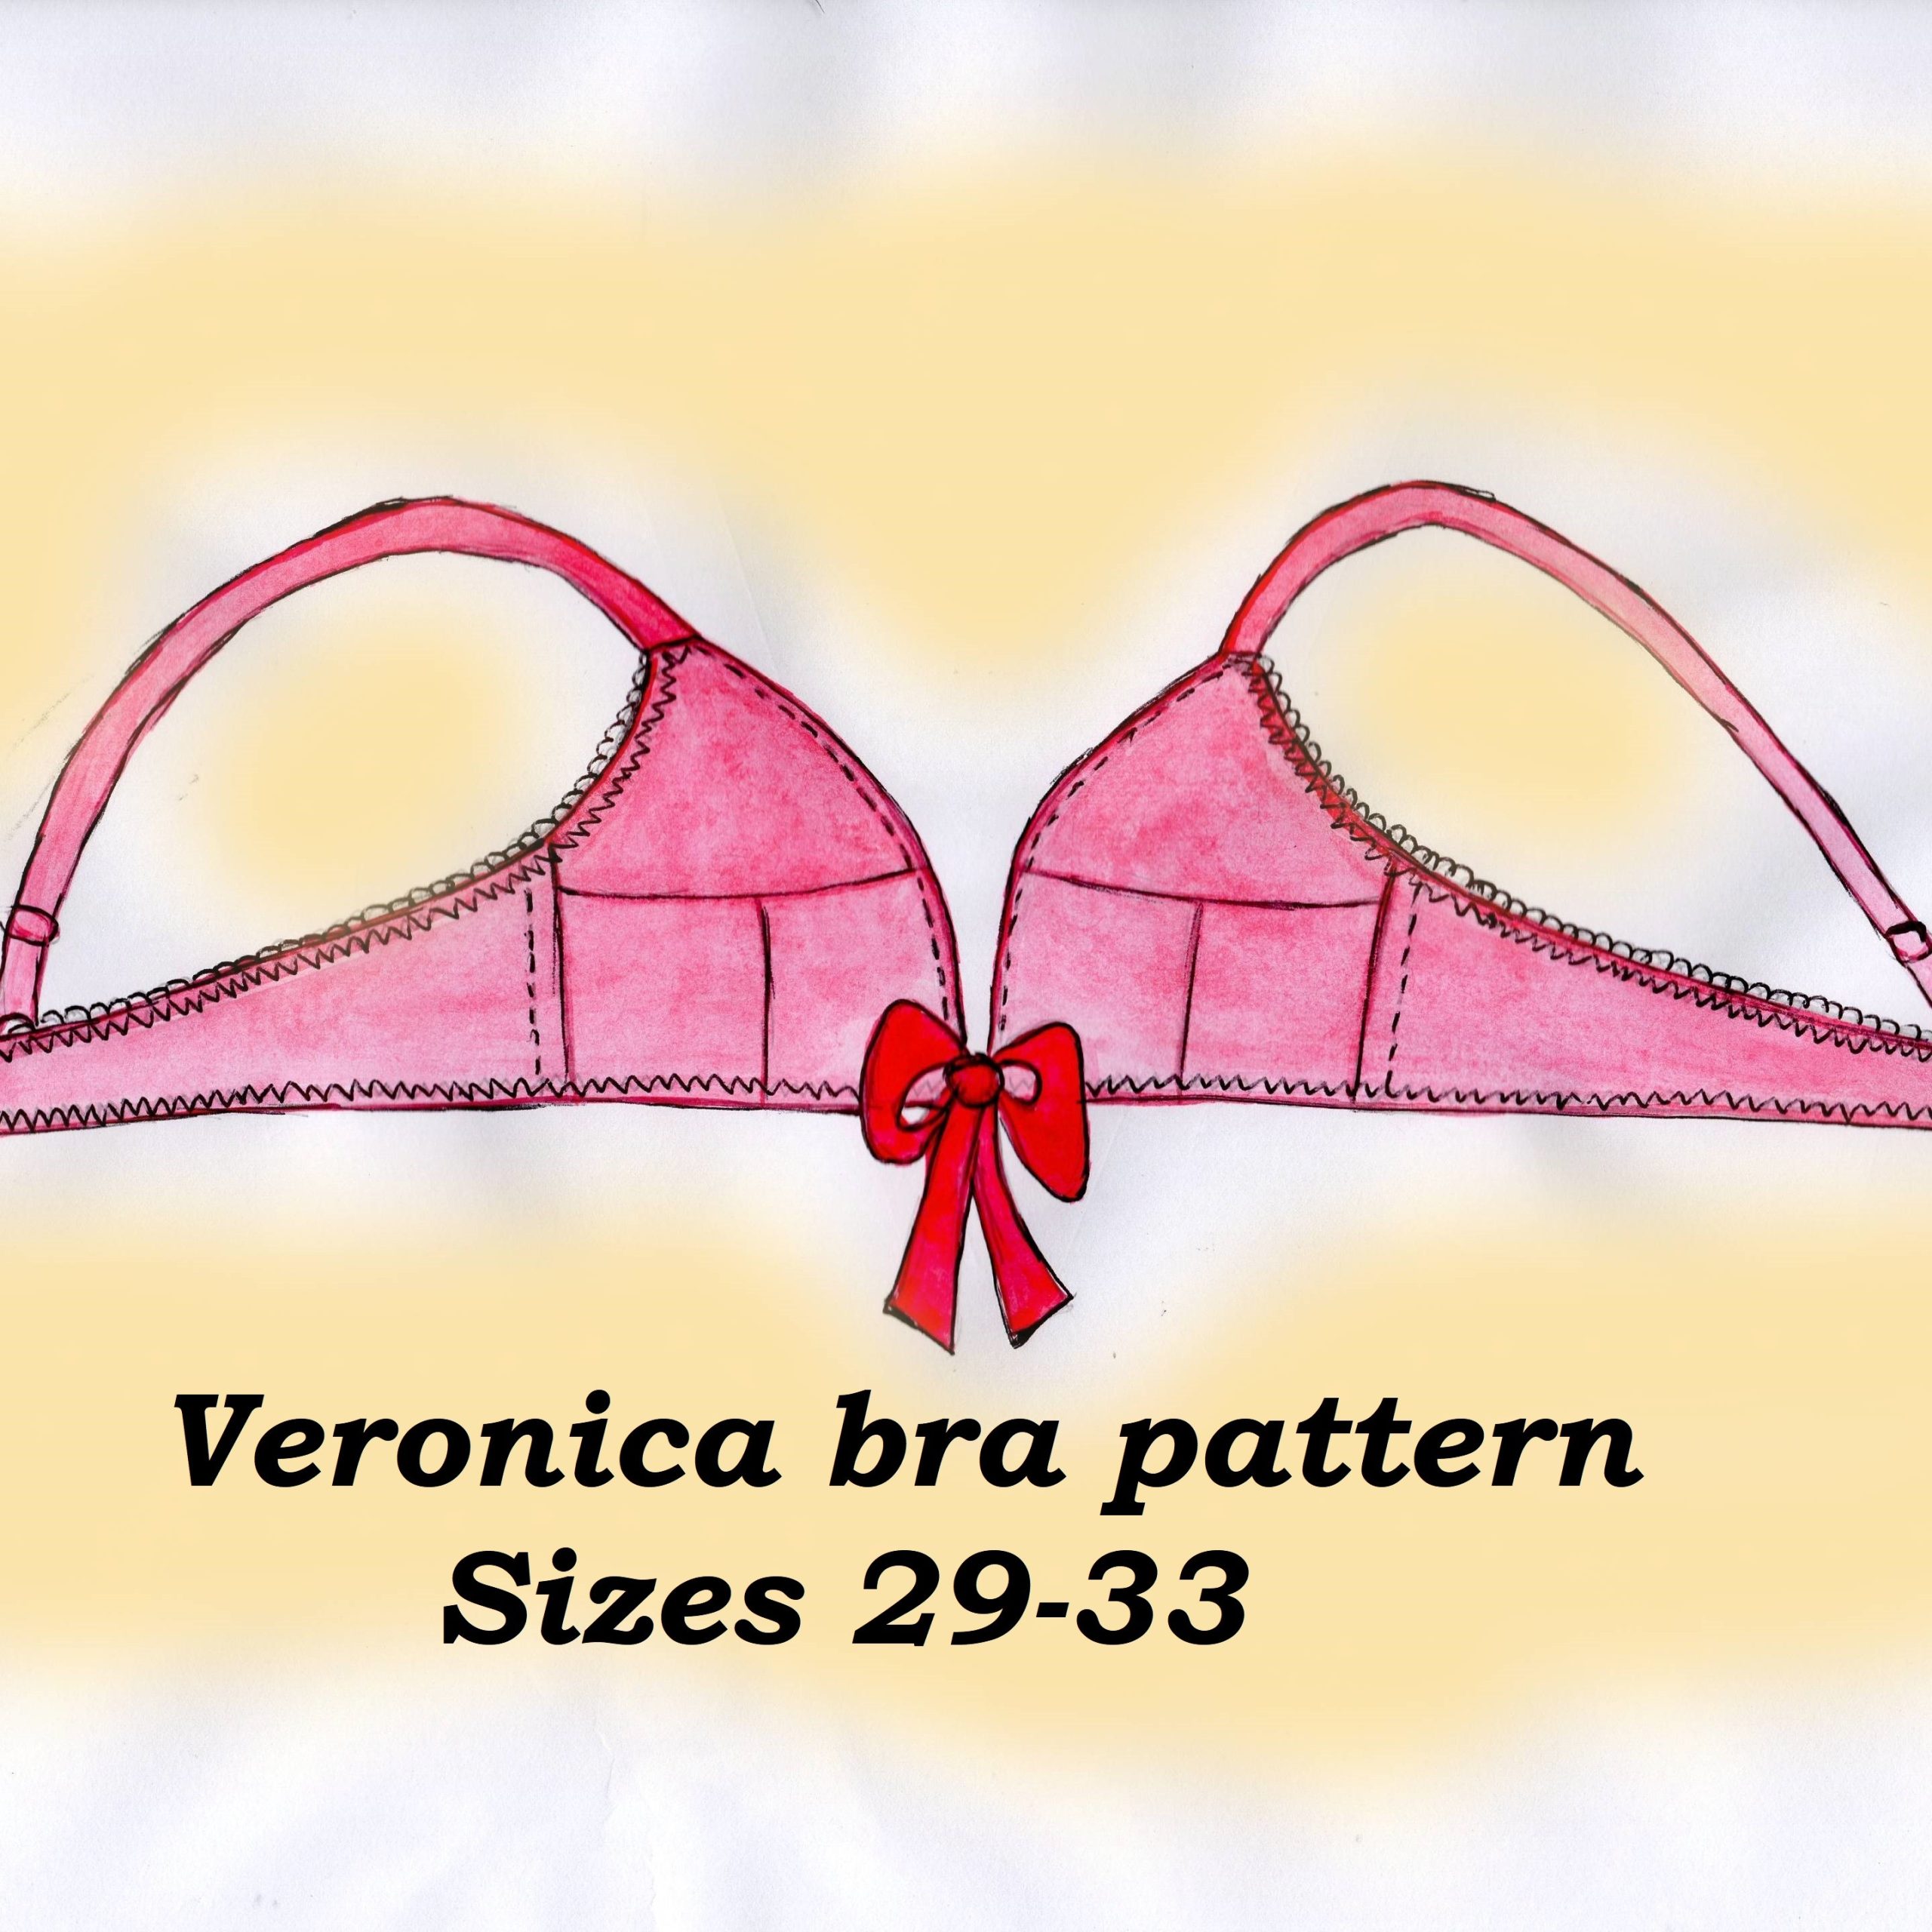 Front clasp bra pattern, Front closure bra pattern plus size